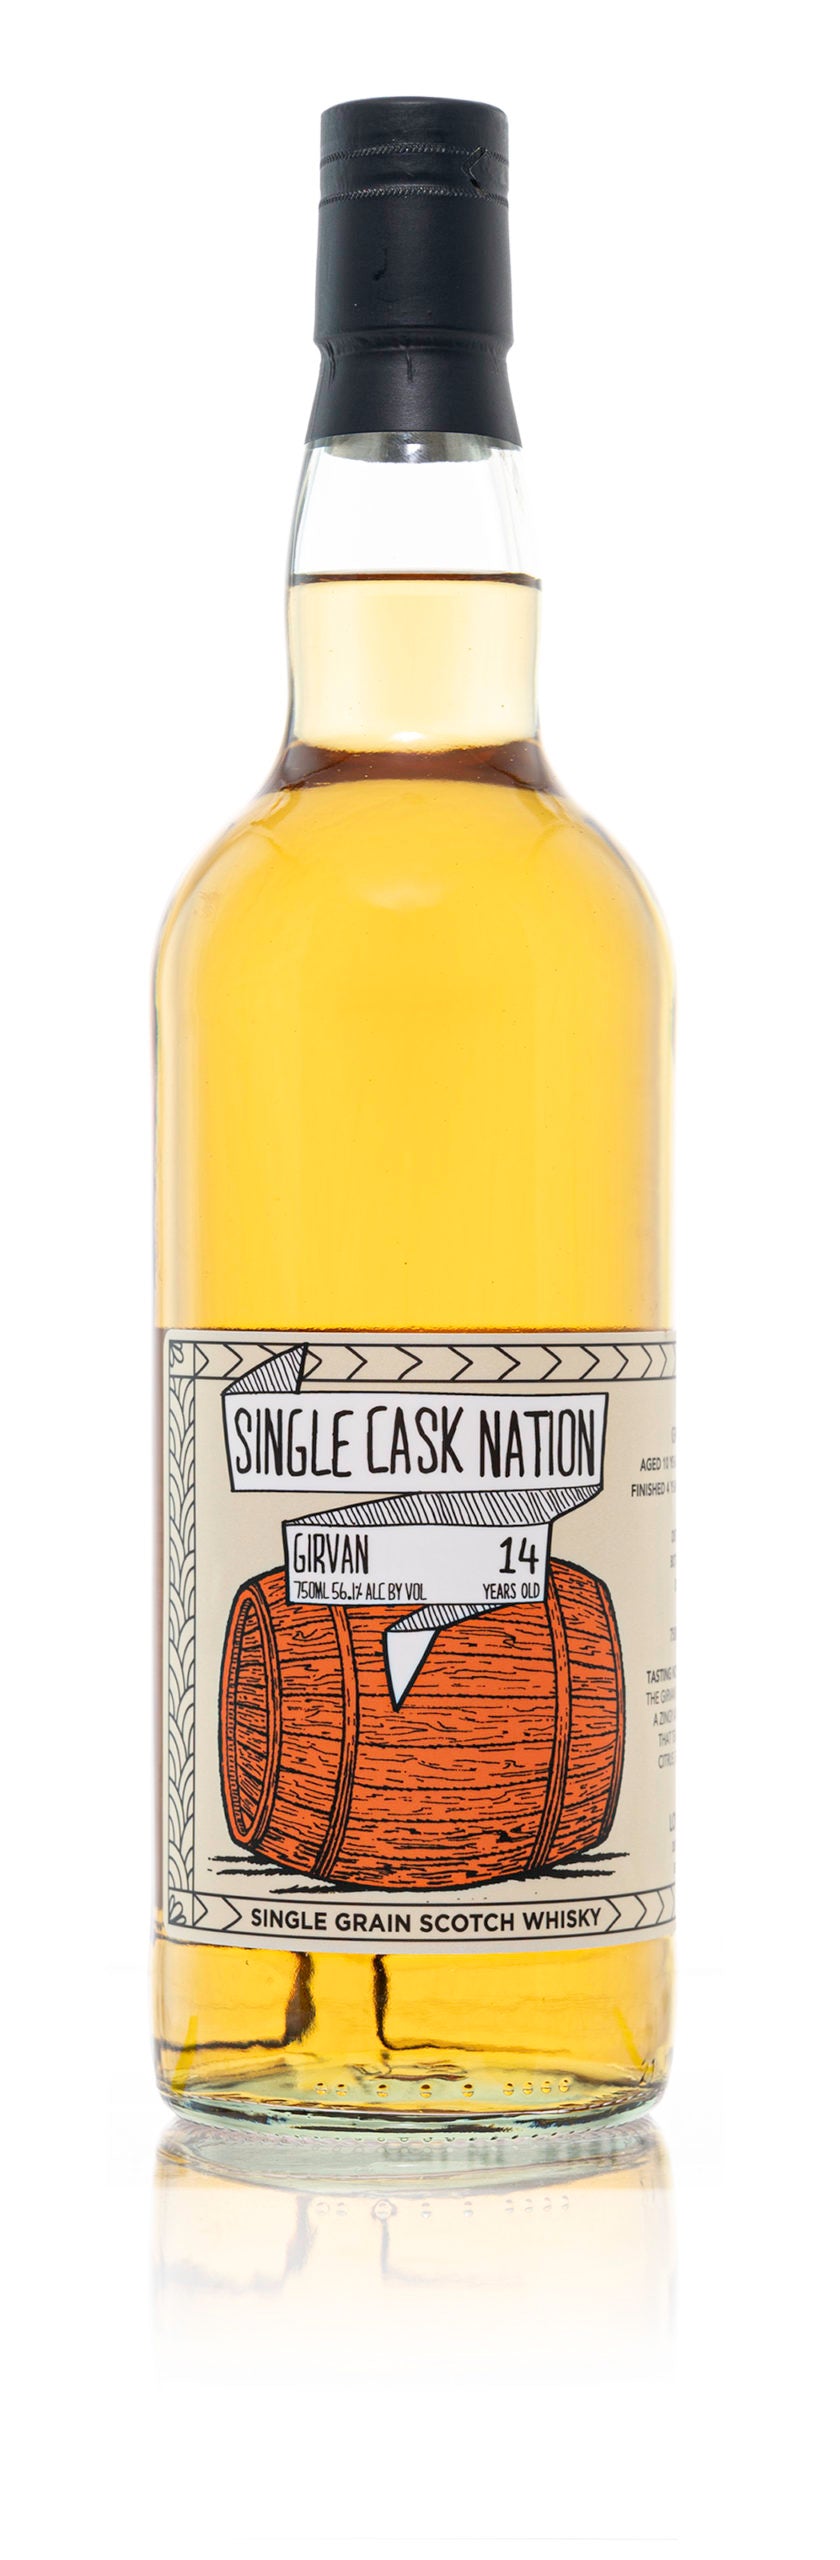 Single Cask Nation Girvan Lowland Single Malt Scotch Whisky 14 Years Old (2006) 750ml